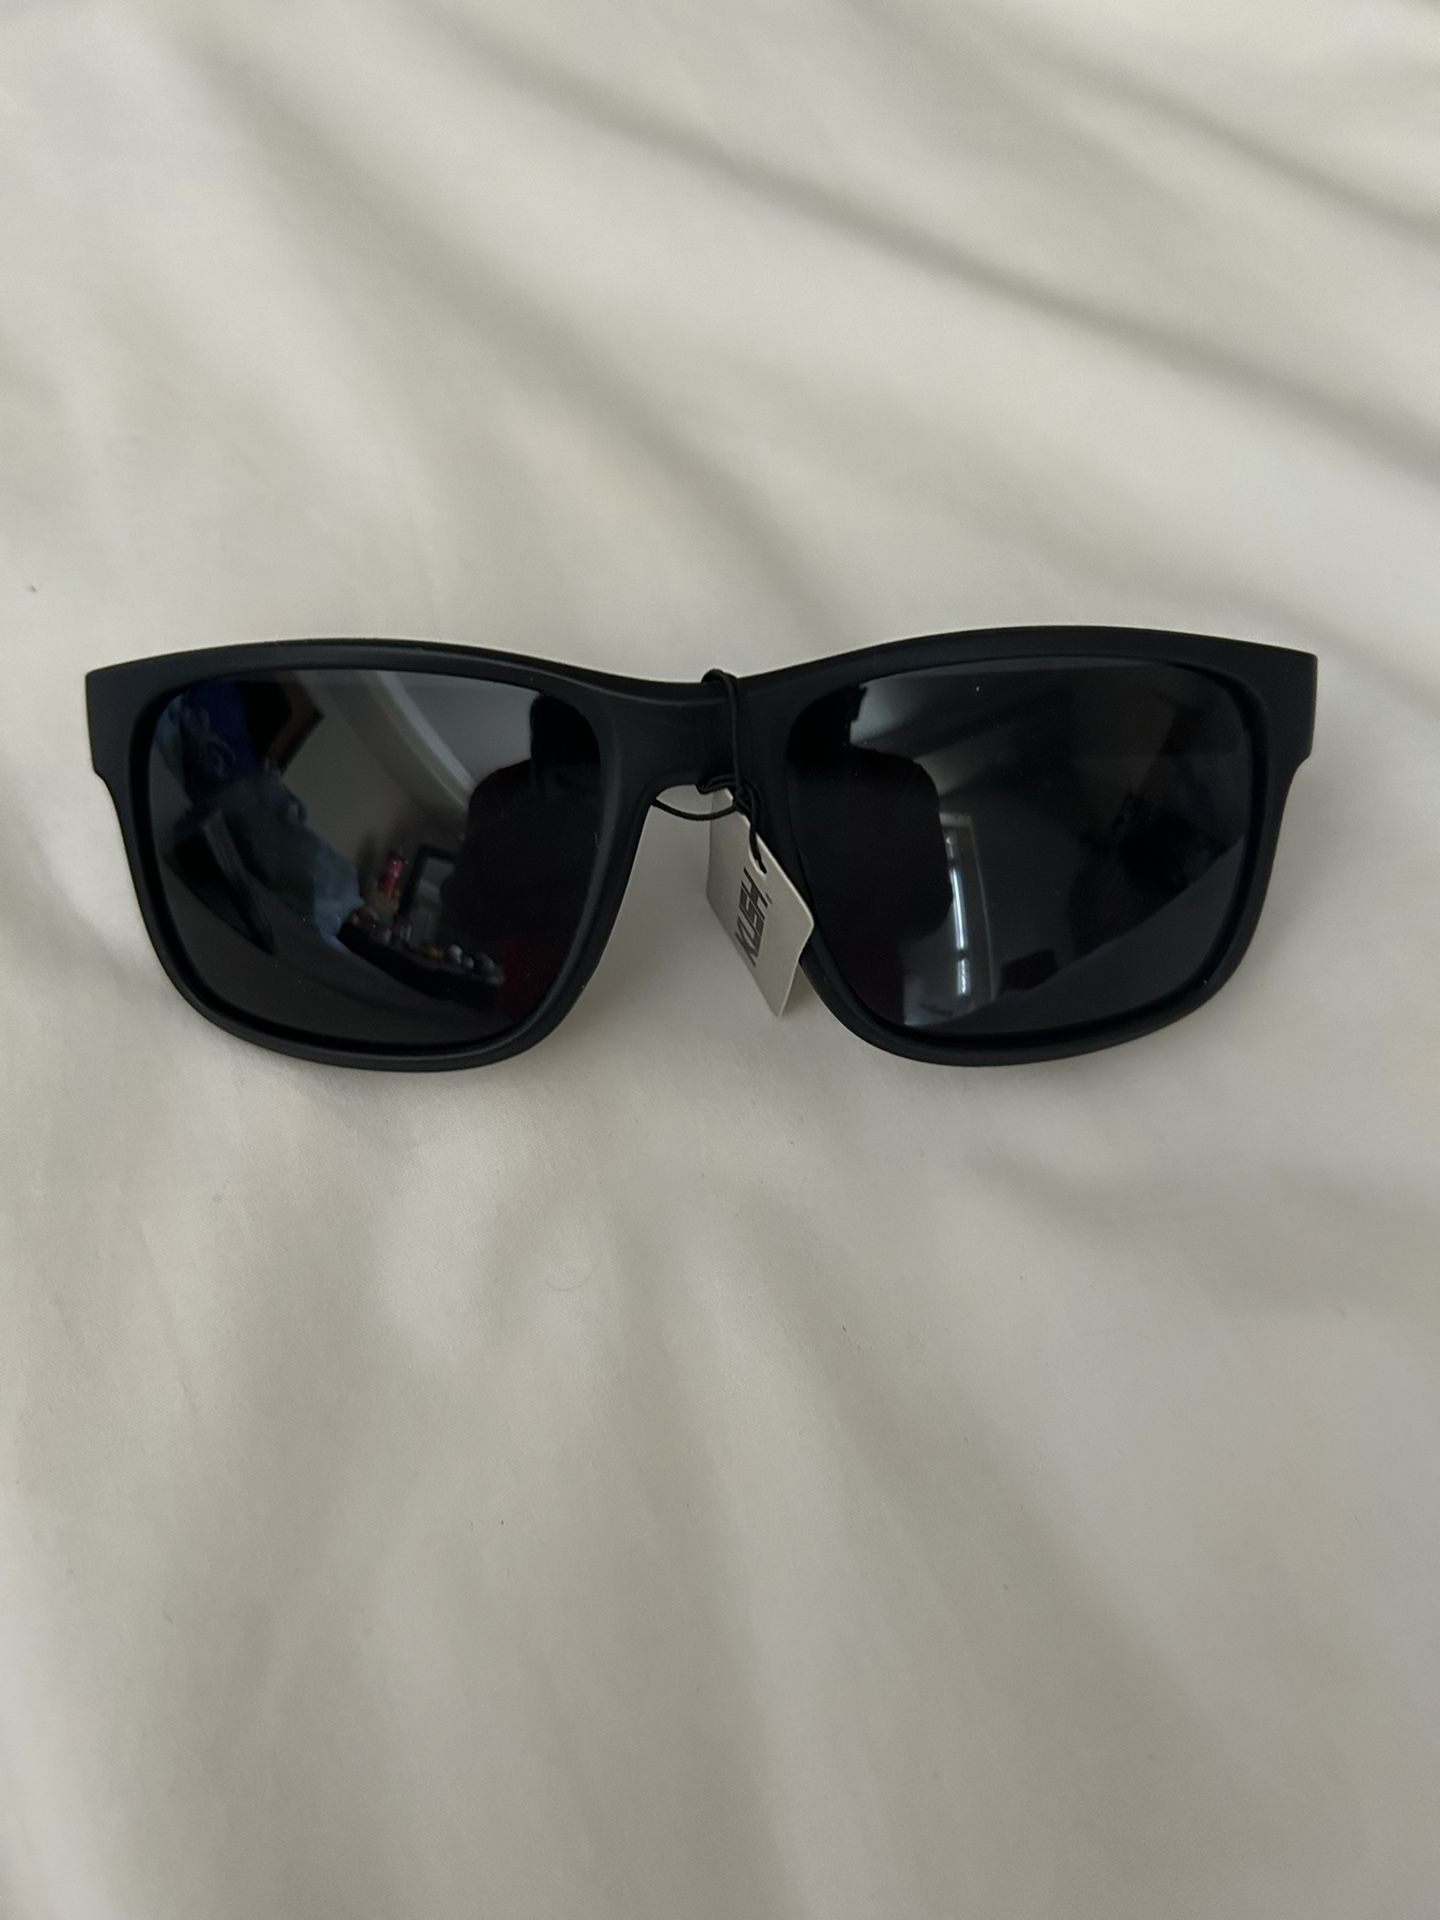 Kush Sunglasses $15 Each 